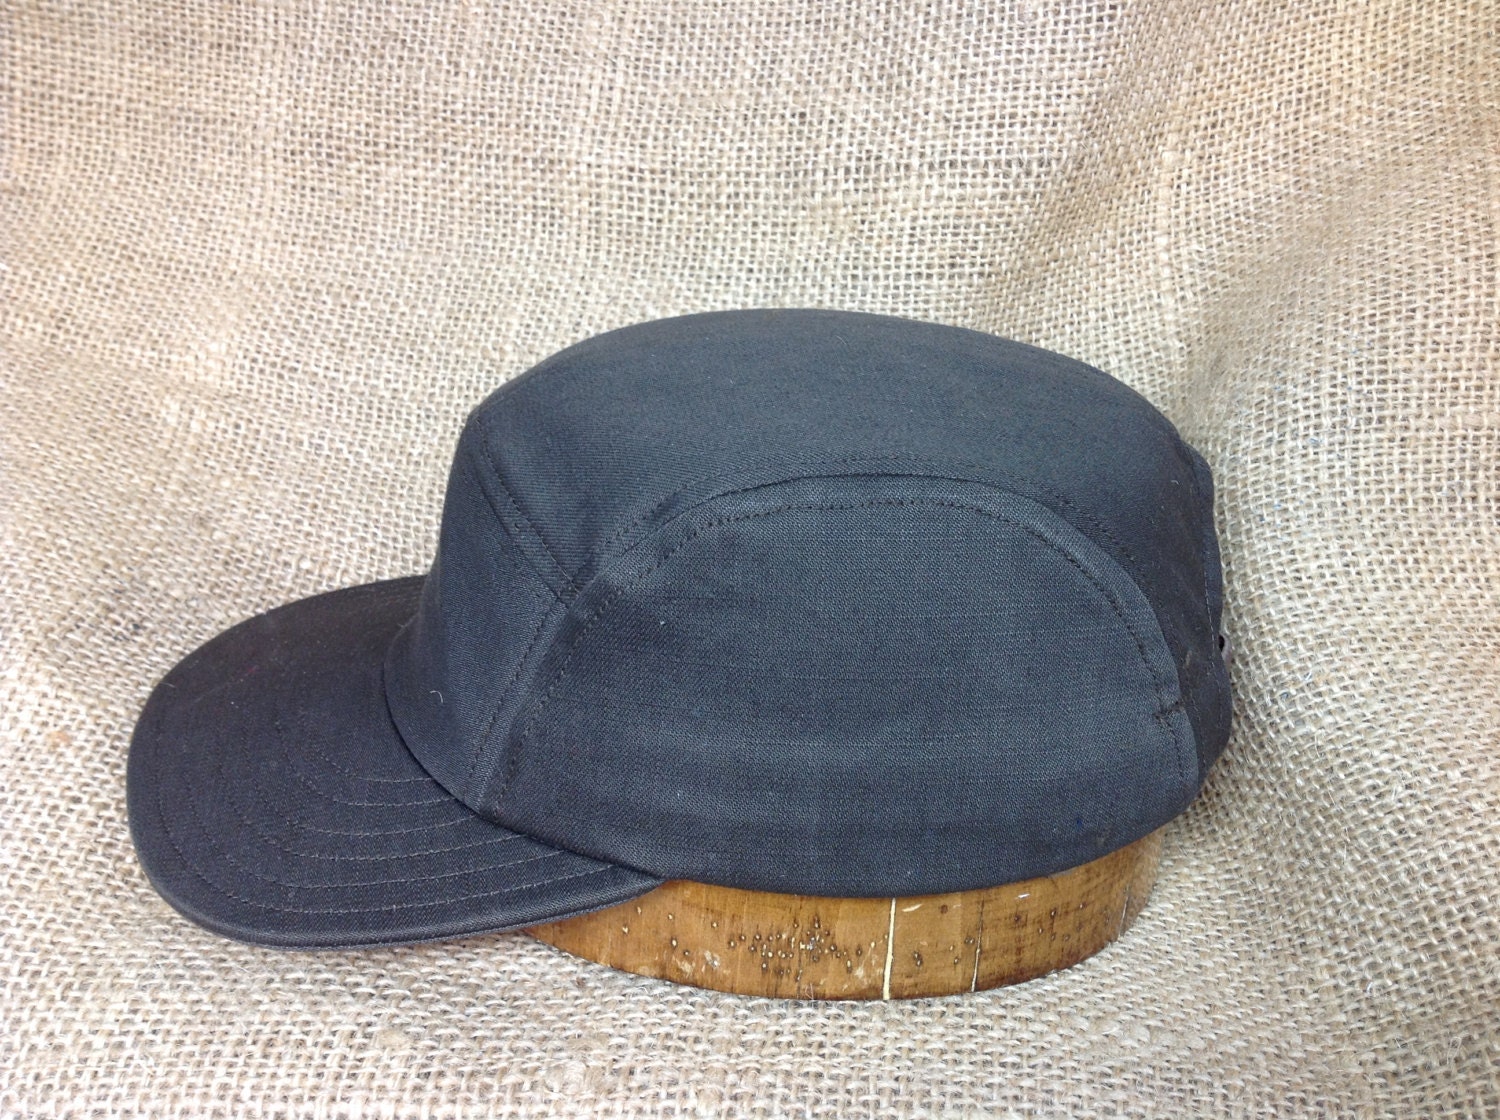 Dark twill 5 panel cap, cotton sweatband, adjustable with leather strap ...